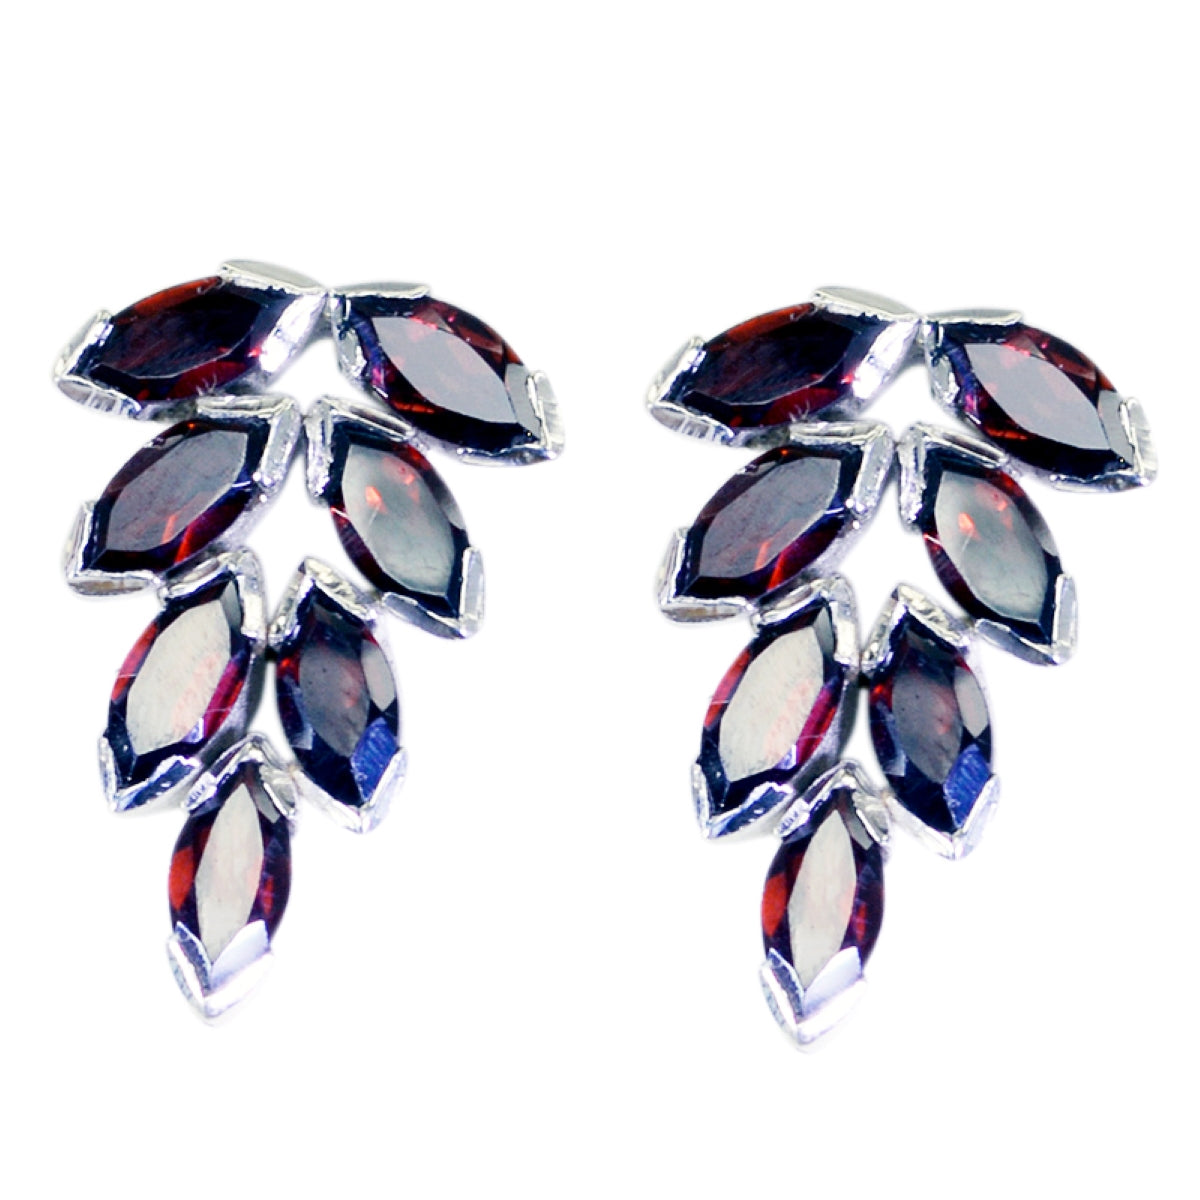 Riyo Genuine Gems Marquise Faceted Red Garnet Silver Earrings gift for sister